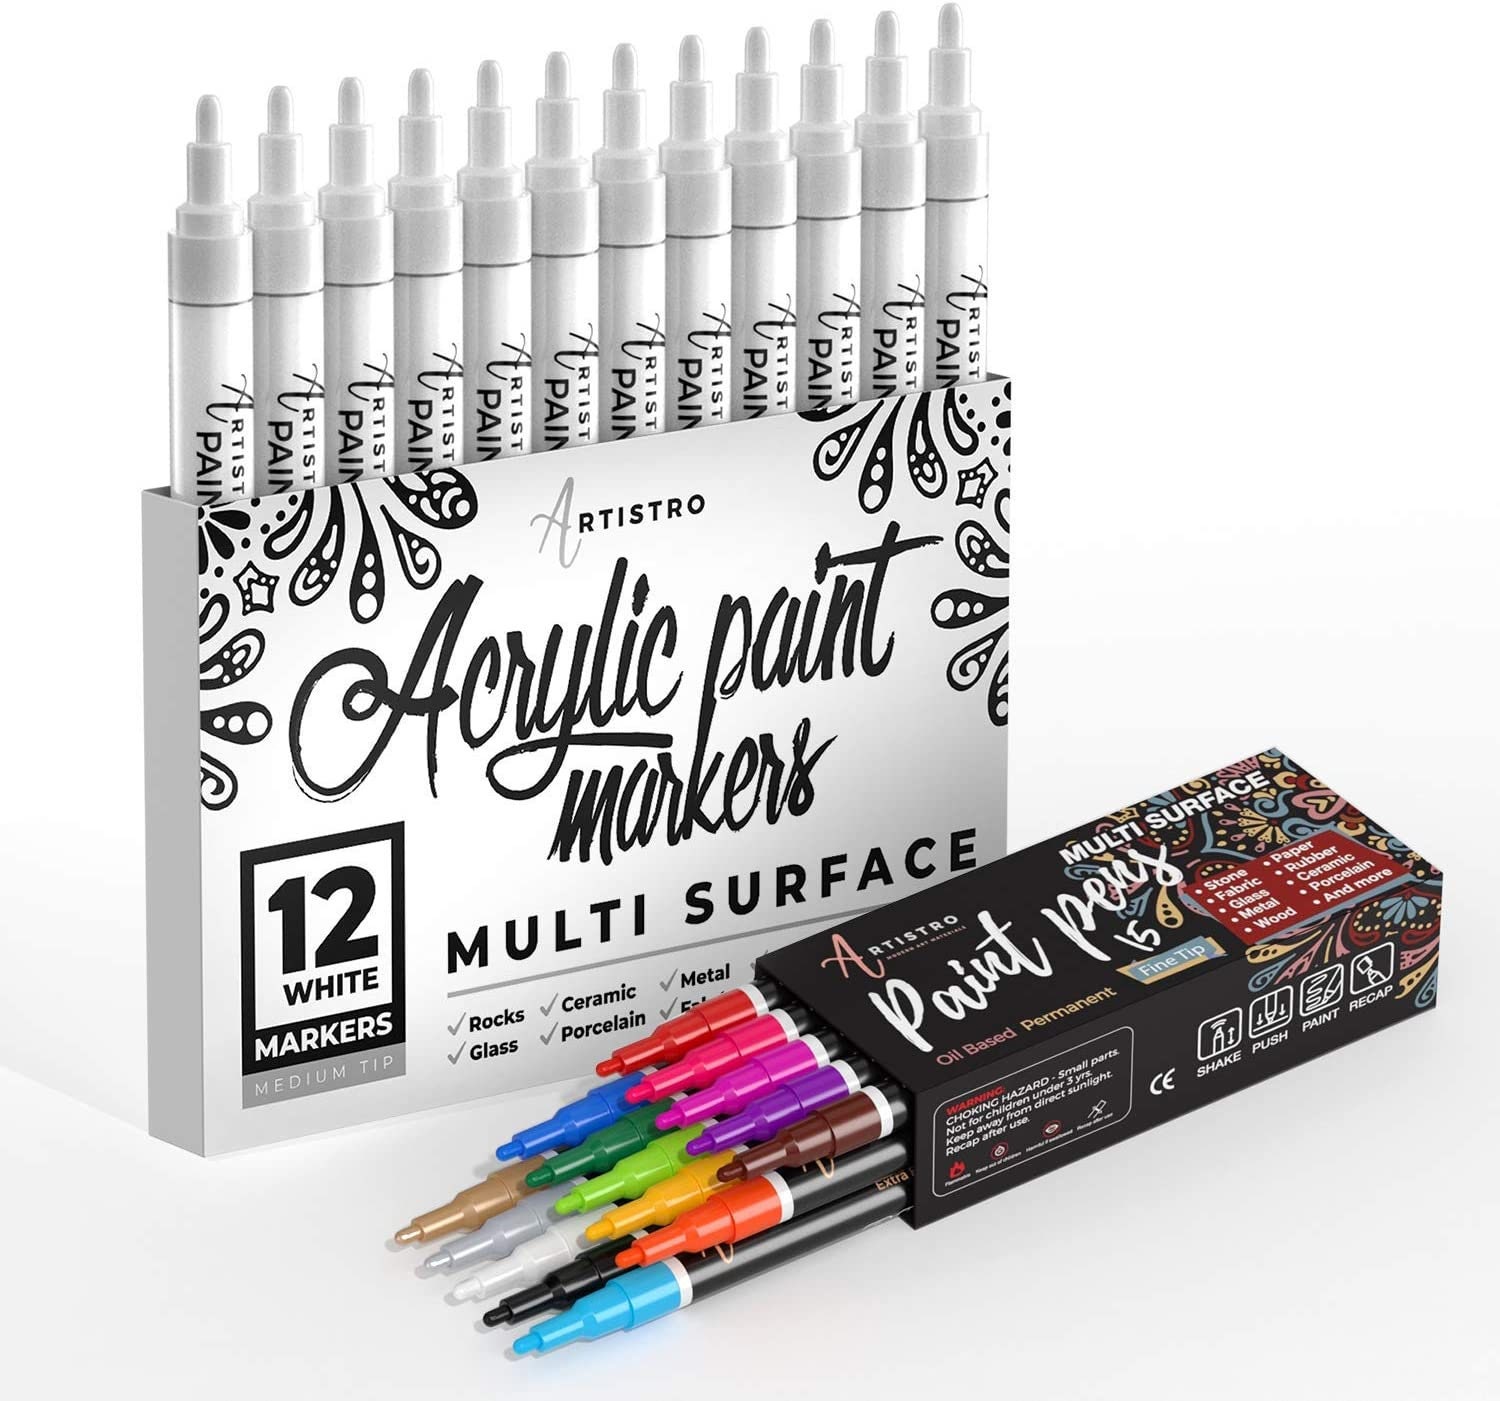 Artistro Art Supply Bundle: Colorful Extra Dozen Art Bundle